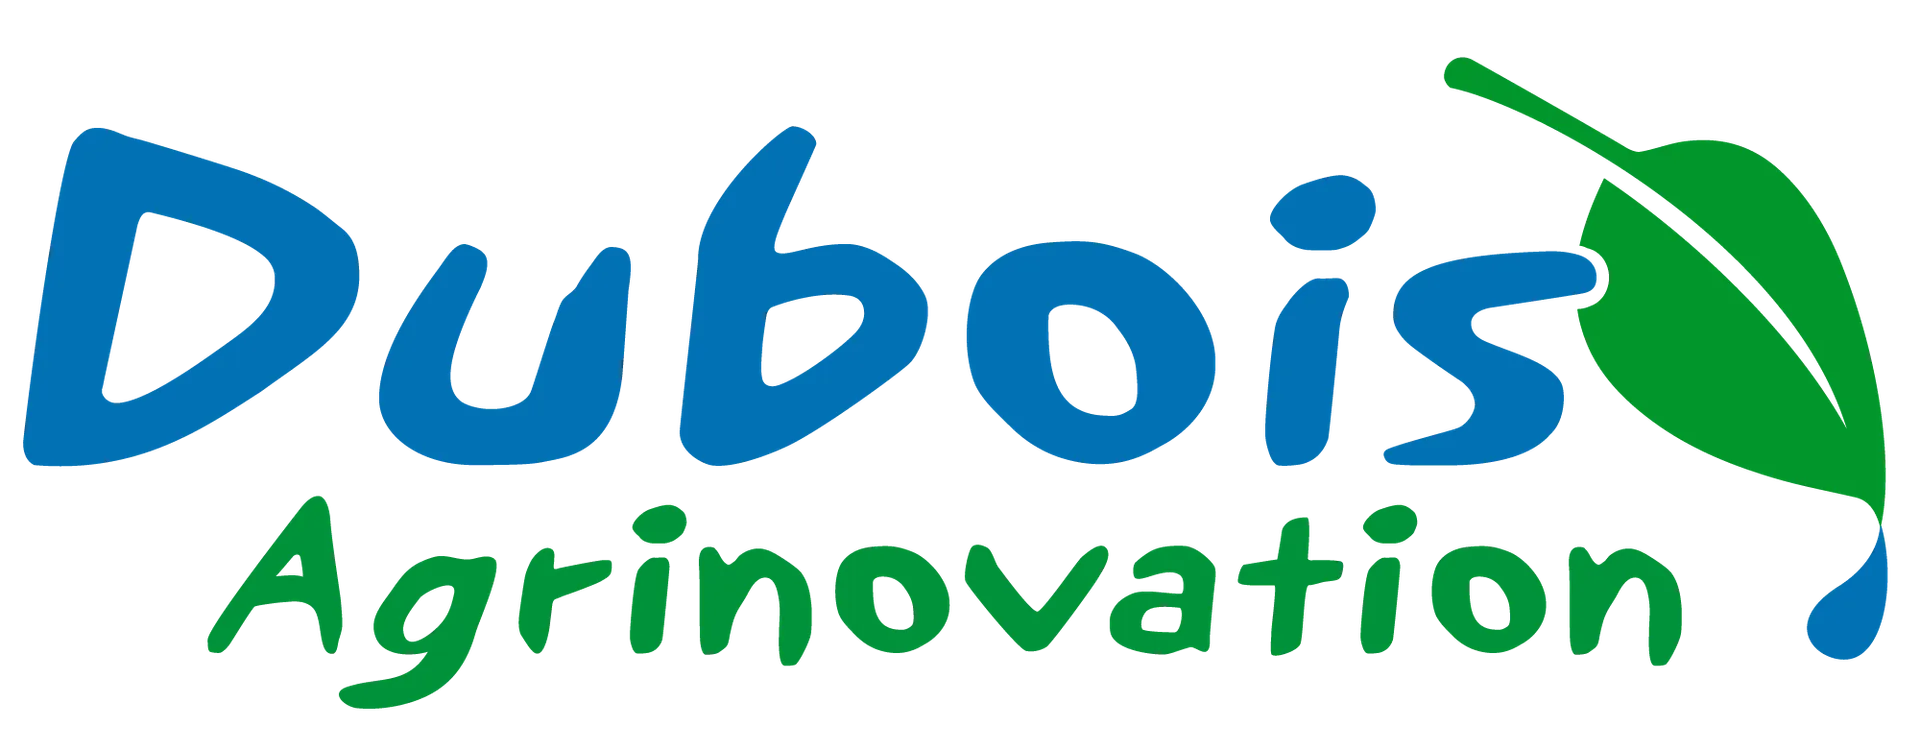 DUBOIS AGRINOVATION logo de circulaires